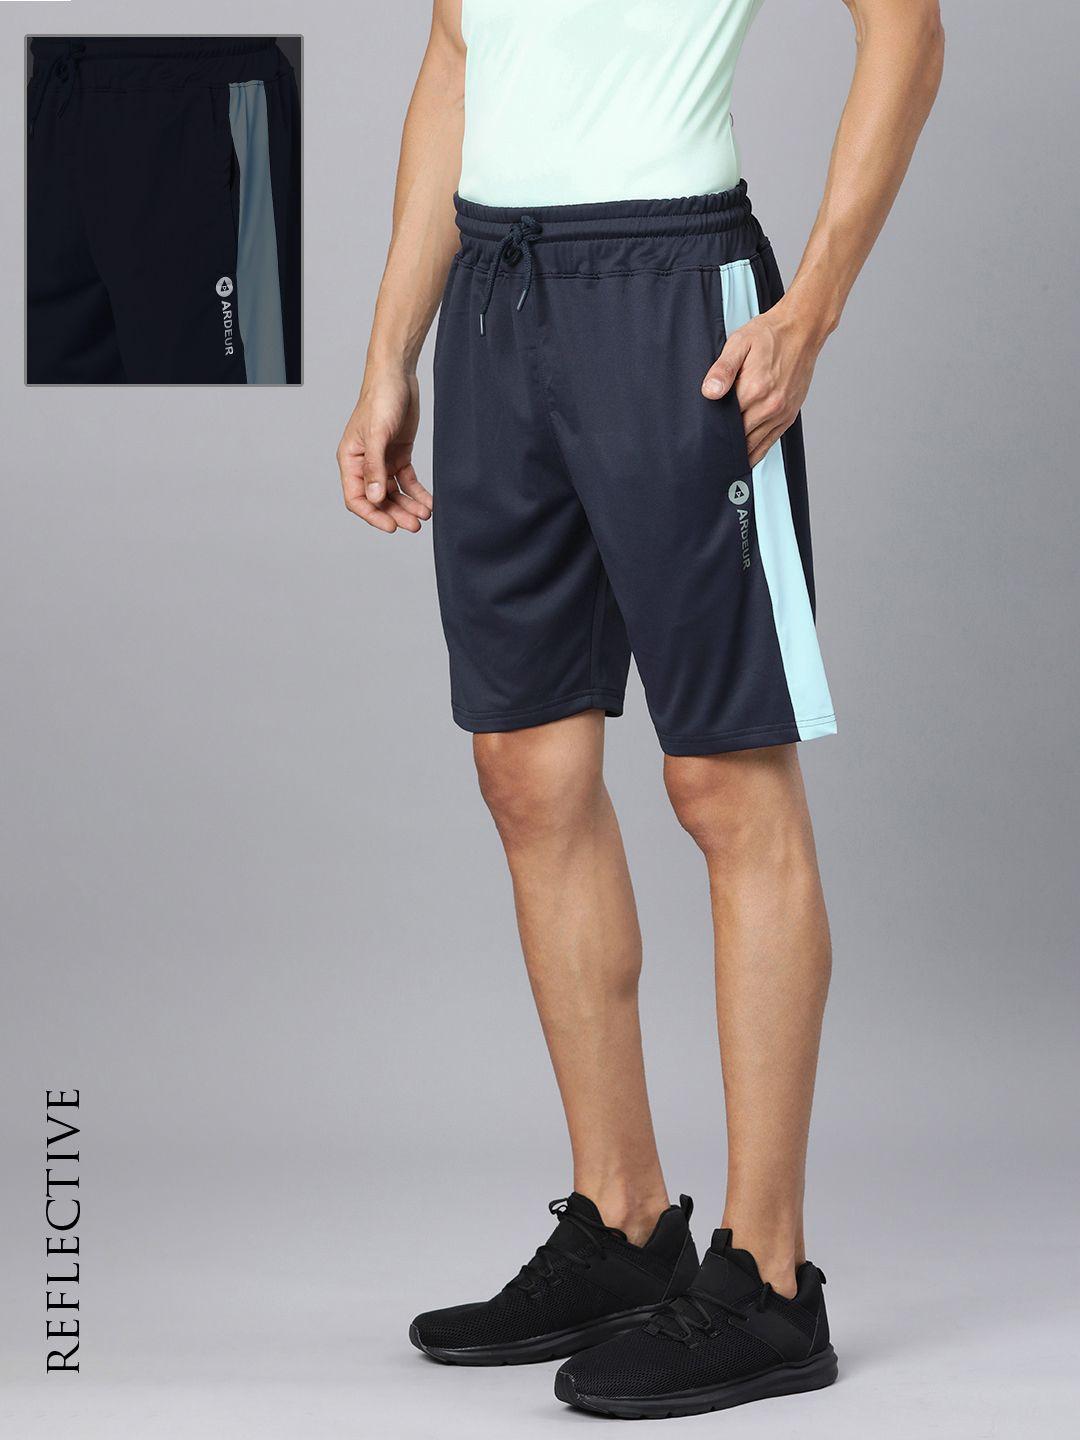 ardeur-men-striped-outdoor-sports-shorts